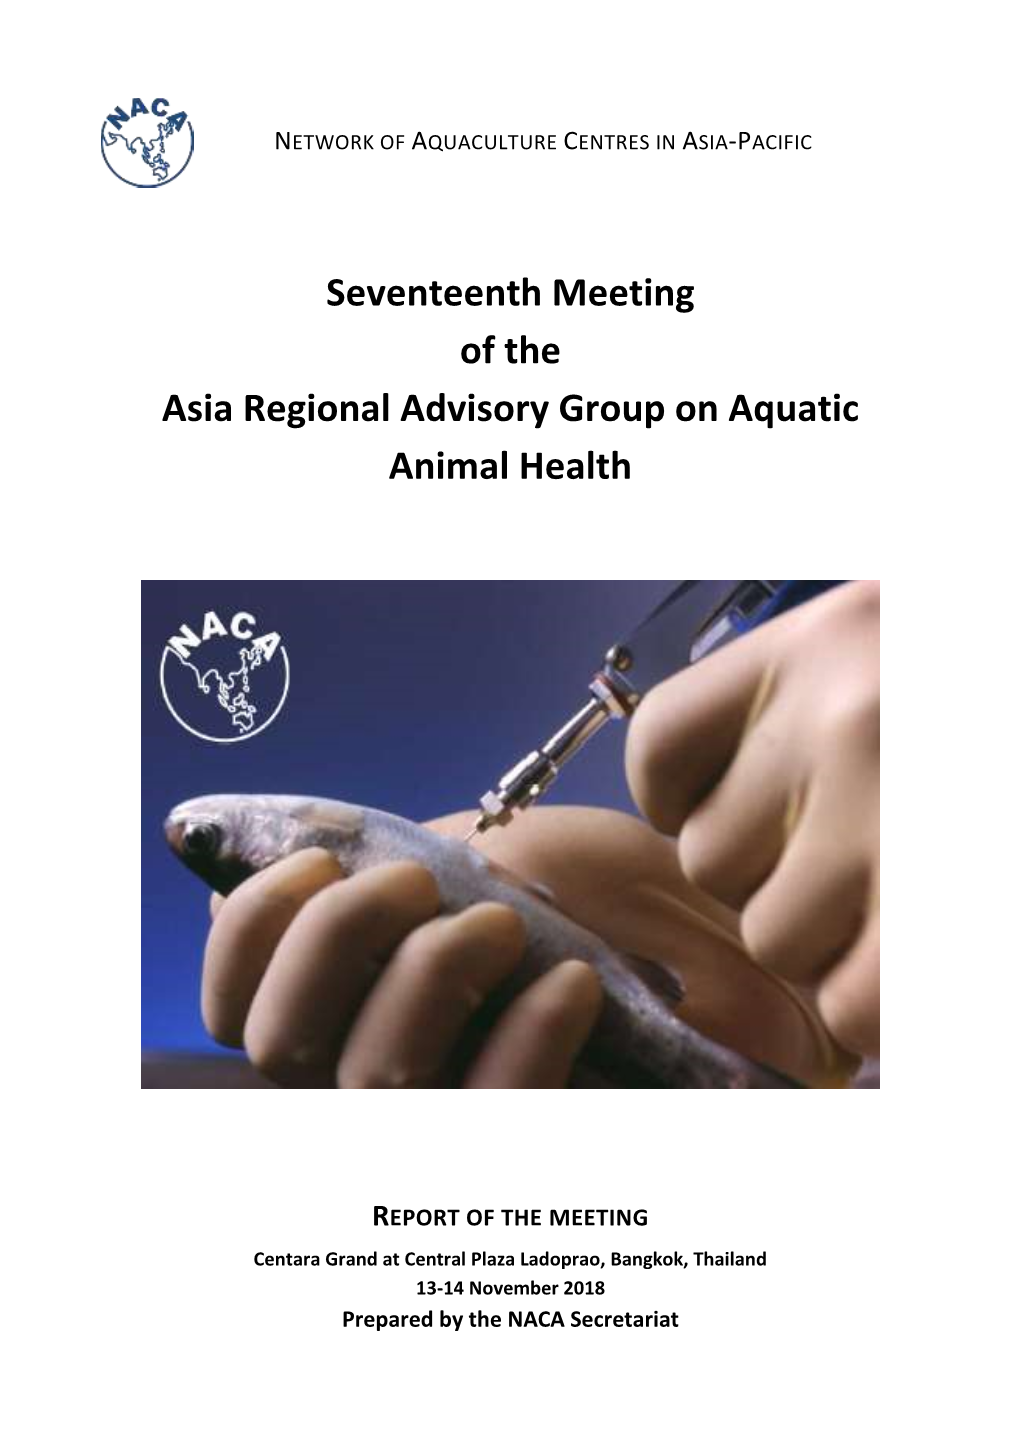 Seventeenth Meeting of the Asia Regional Advisory Group on Aquatic